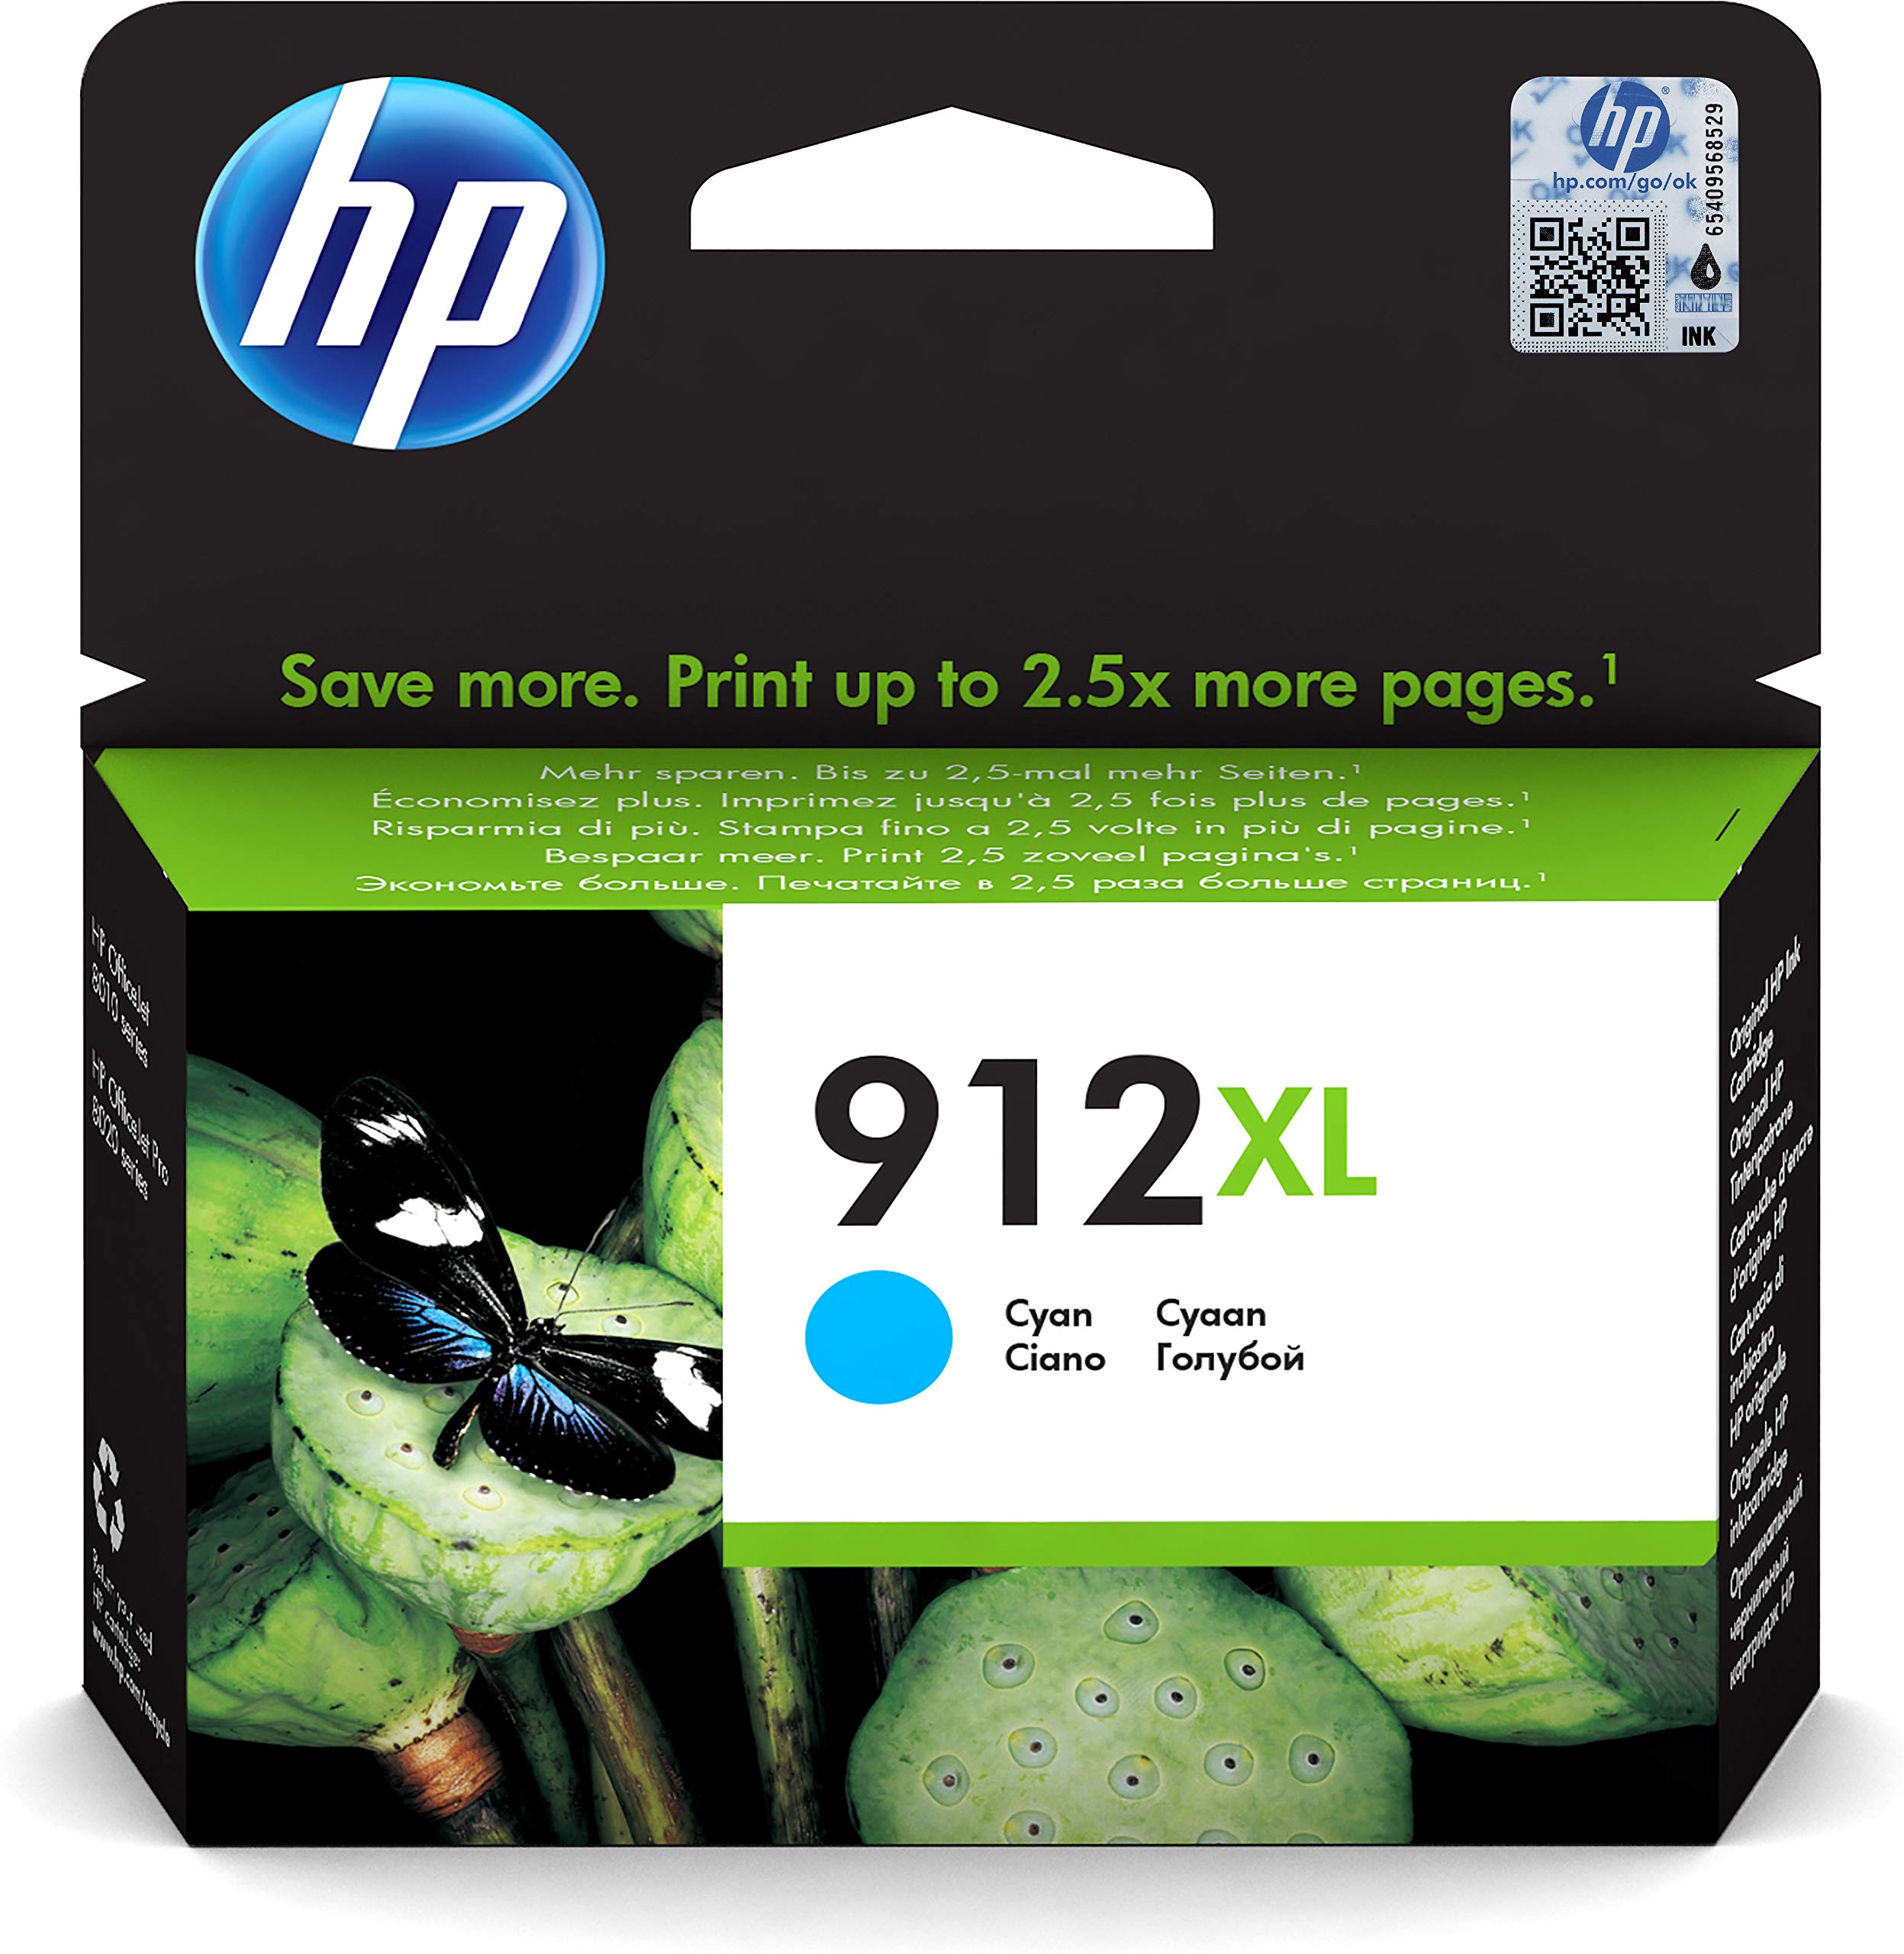 HP 912XL High Yield Cyan Original Ink Cartridge - 3YL81AE